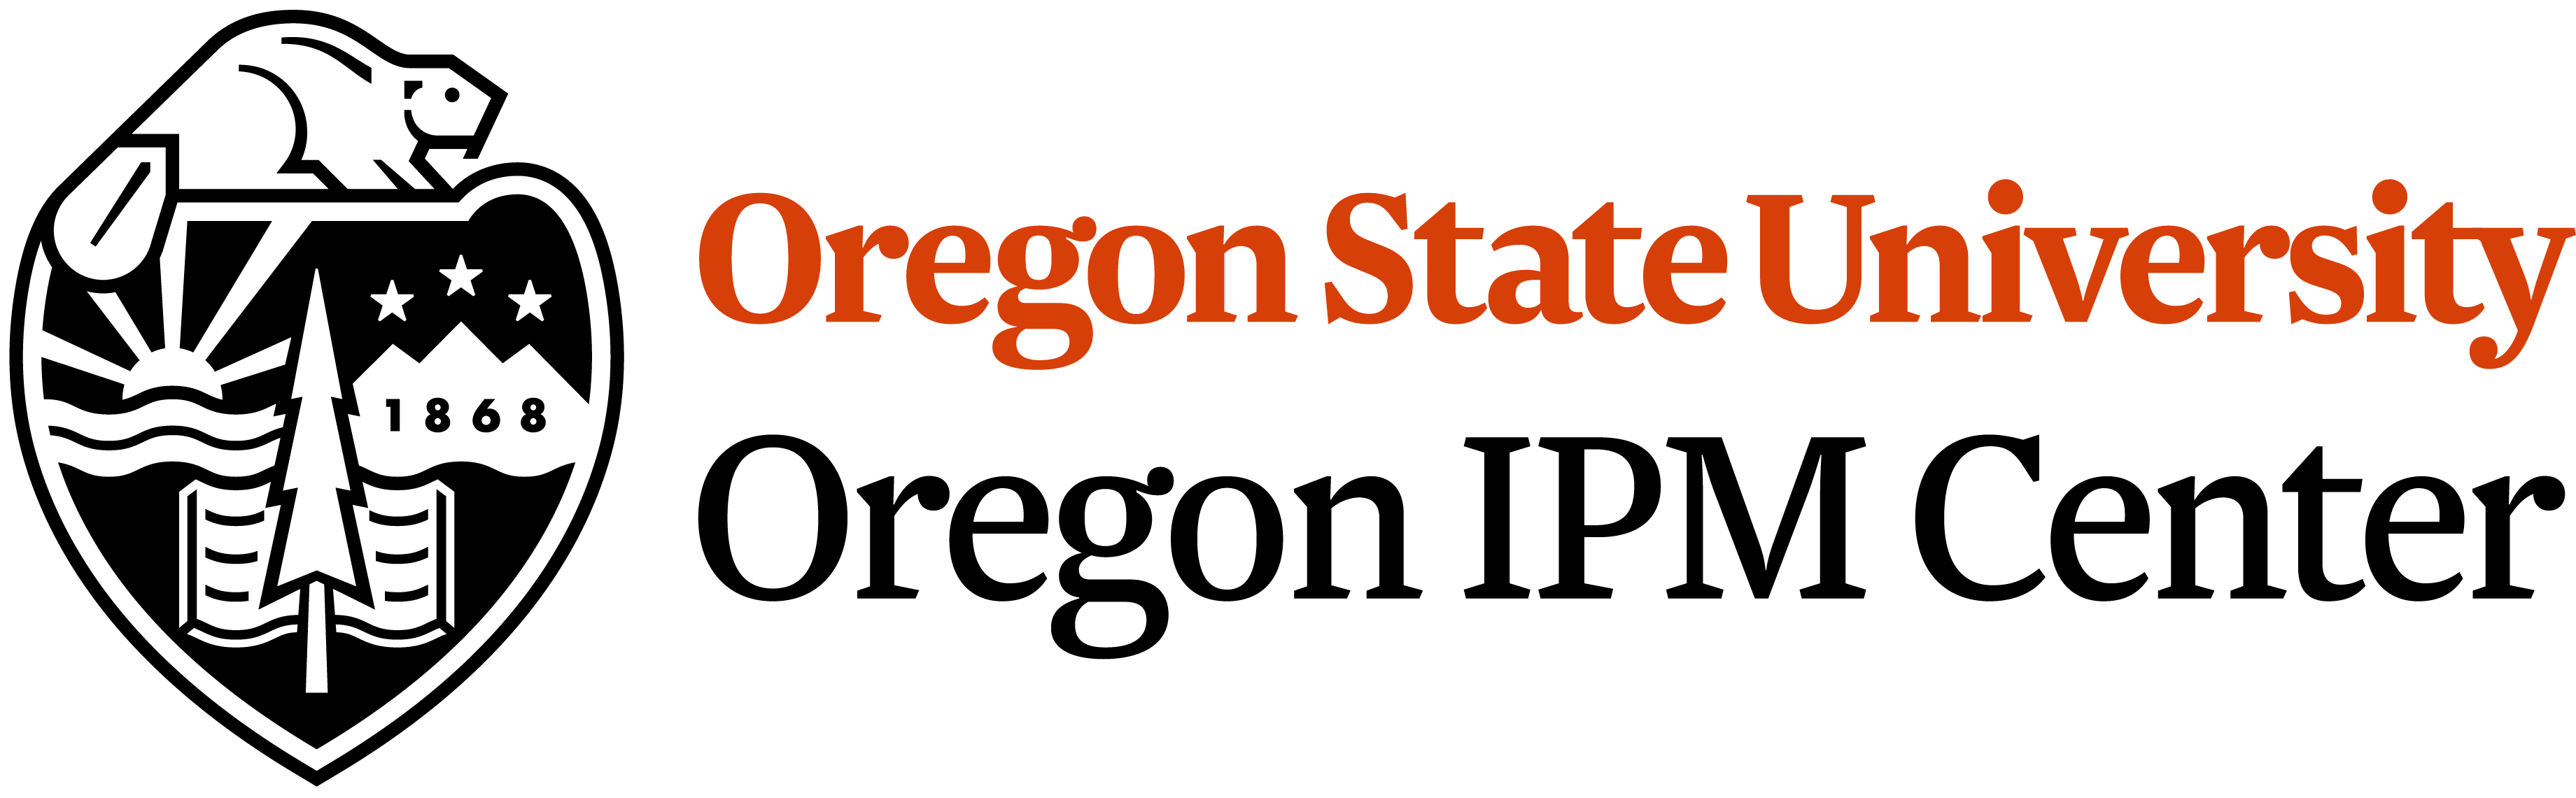 Oregon IPM Center at Oregon State University